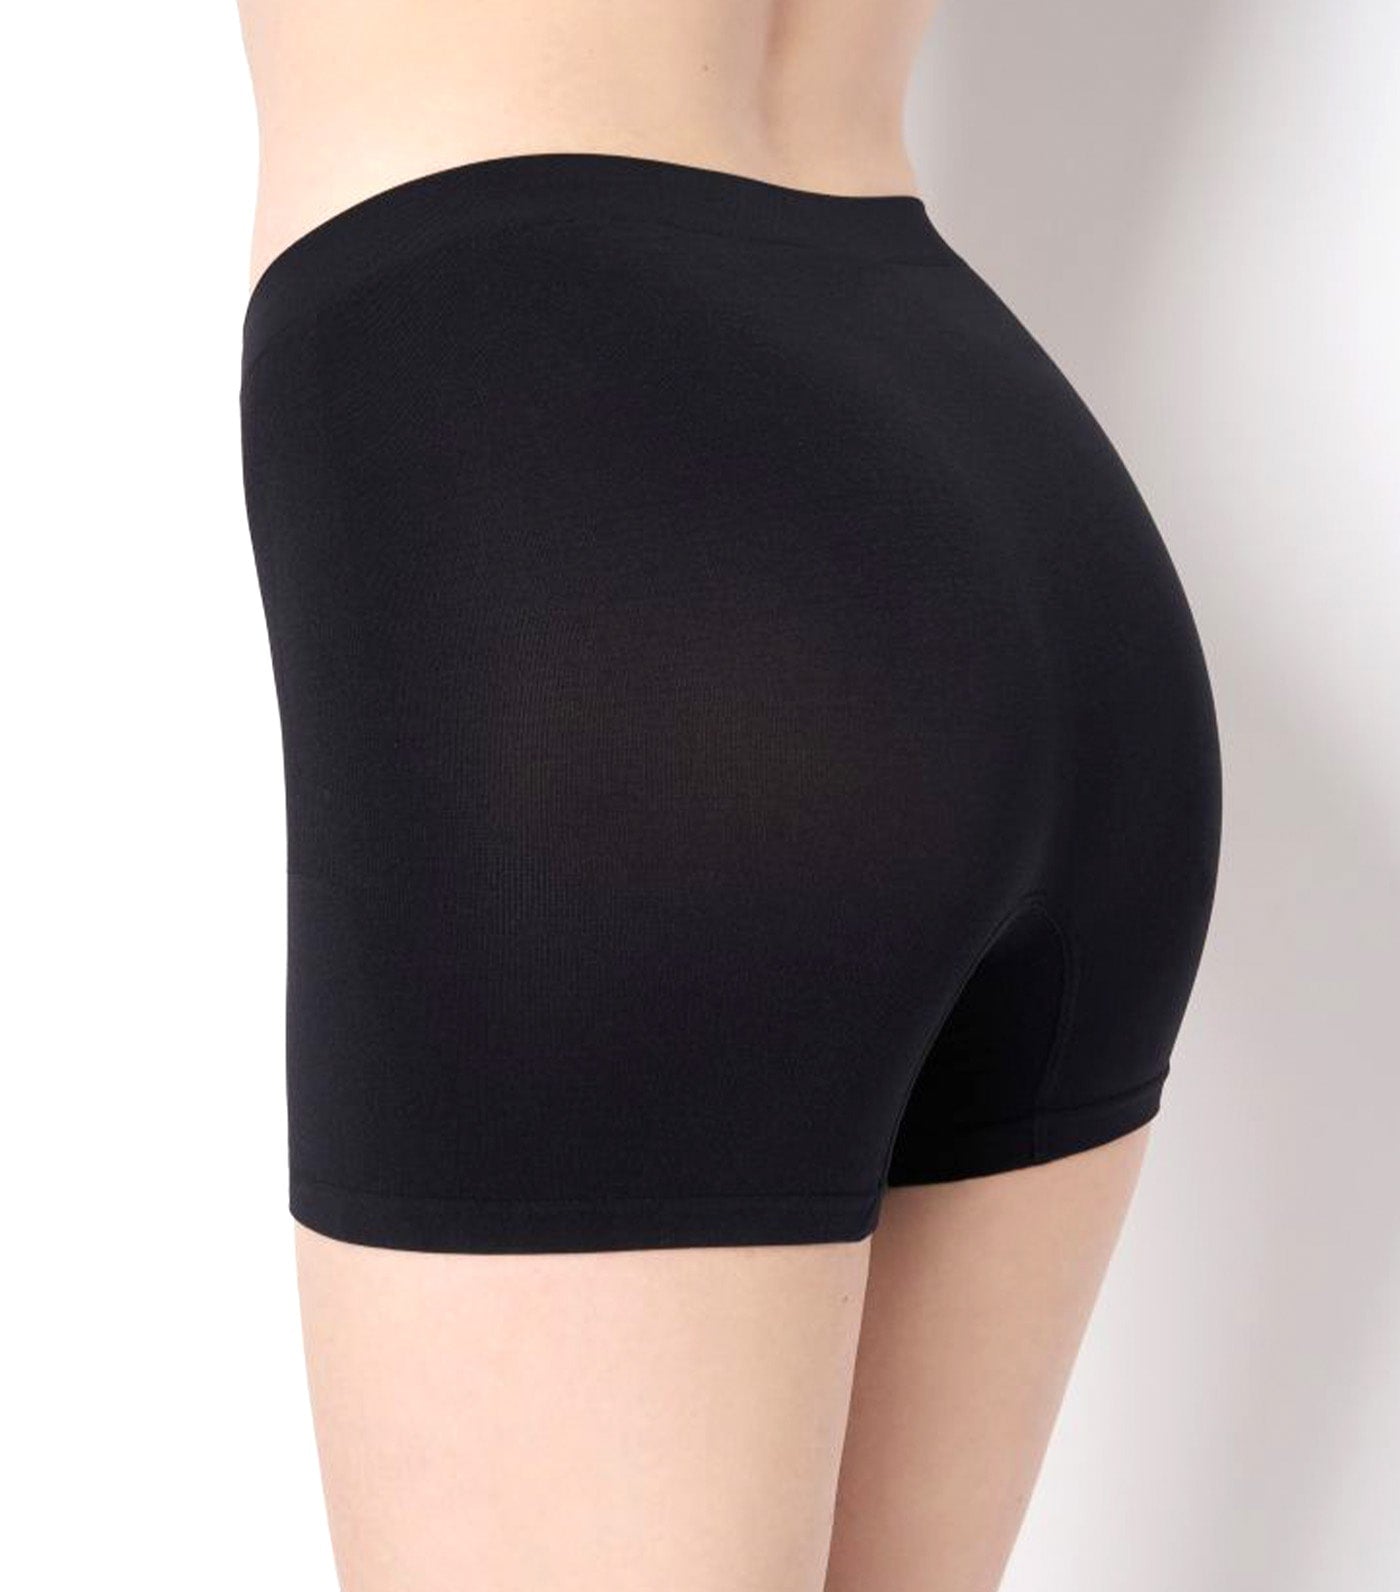 THIGHBRUSH® OUTLAW - Women's Underwear - Booty Shorts - Black